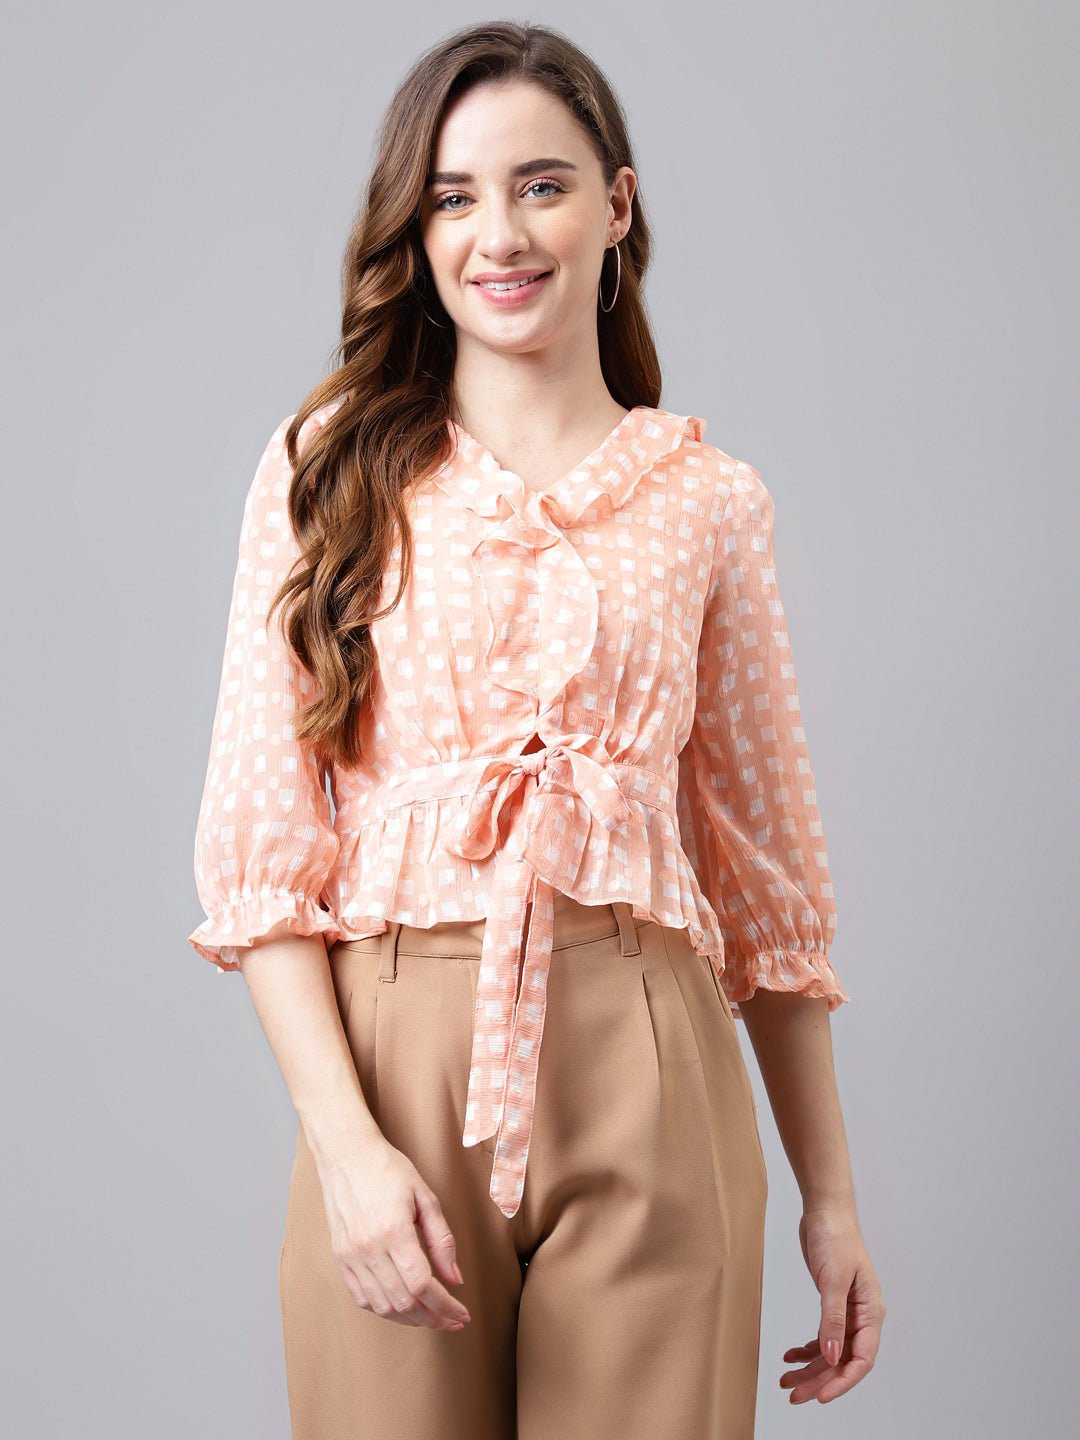 Orange 3/4 Sleeve Ruffle Neck Printed Women Short Blouse Top